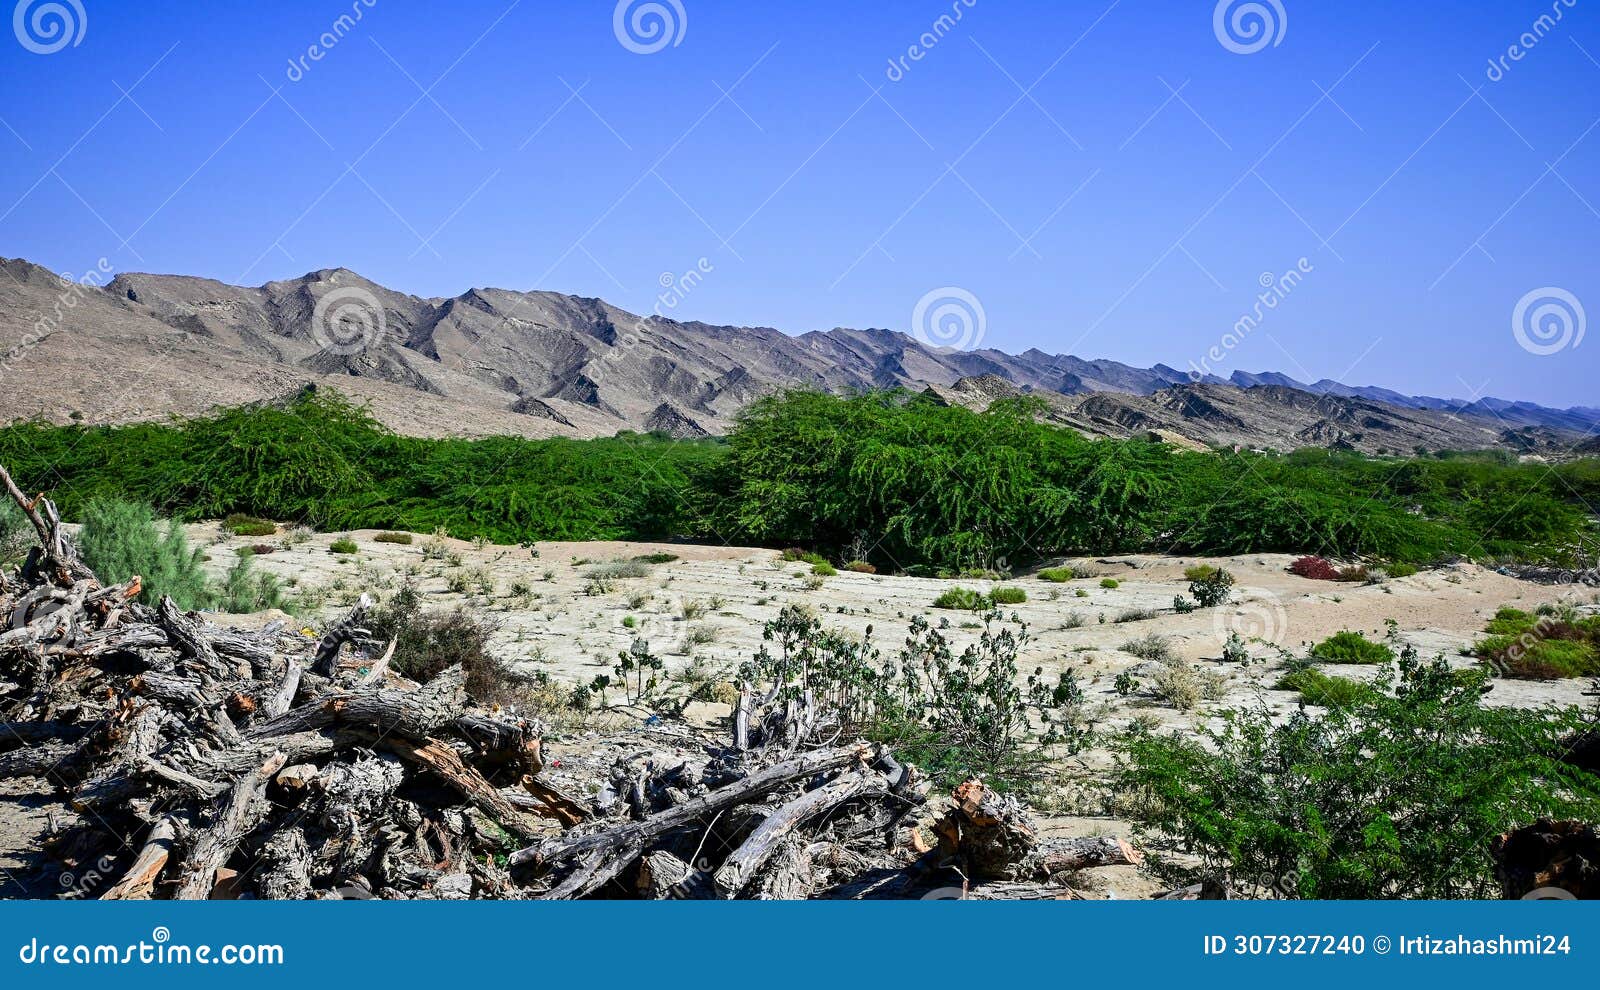 mountains in kund malir, baluchistan studded with vegetation.